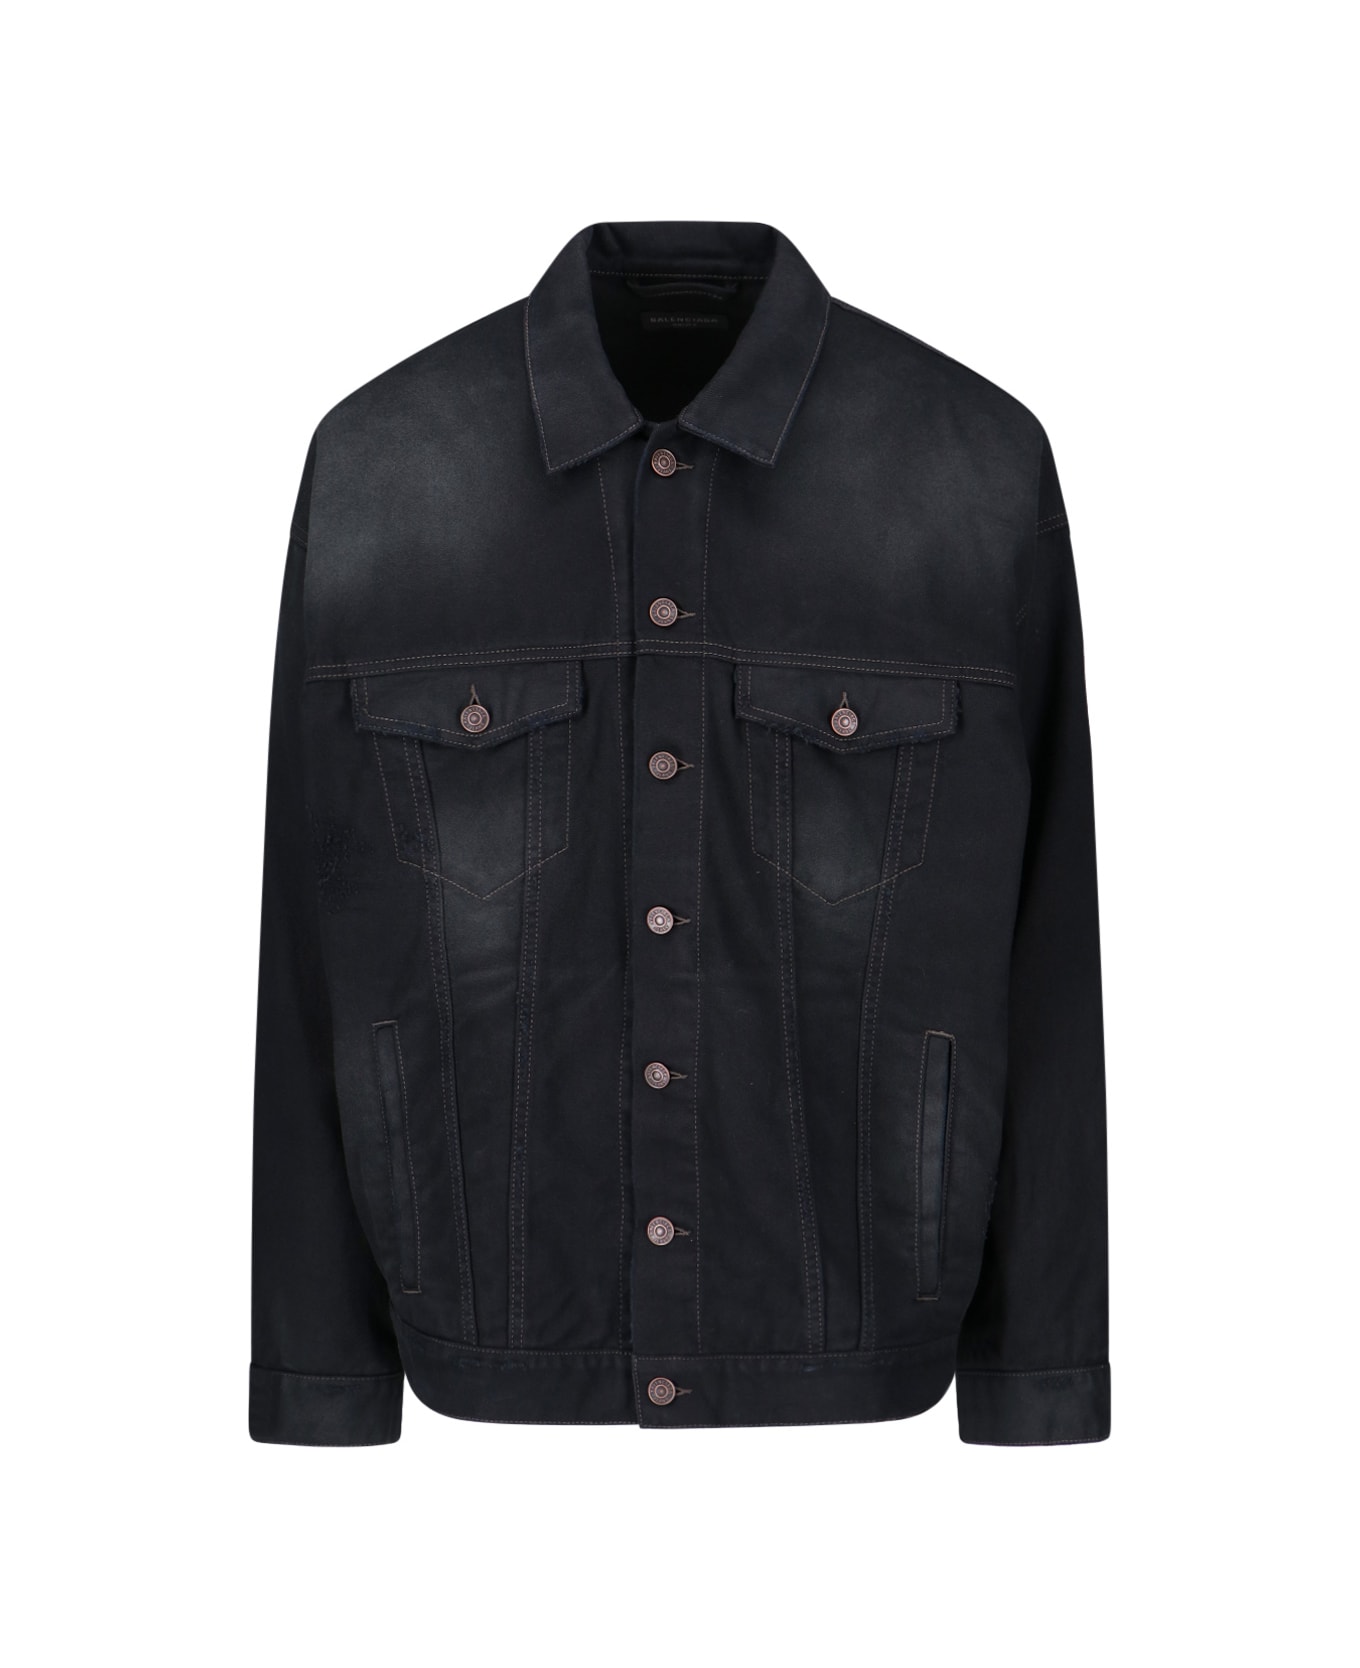 Balenciaga Oversized Black Jacket With Obscured Logo In Cotton Denim Man - Black